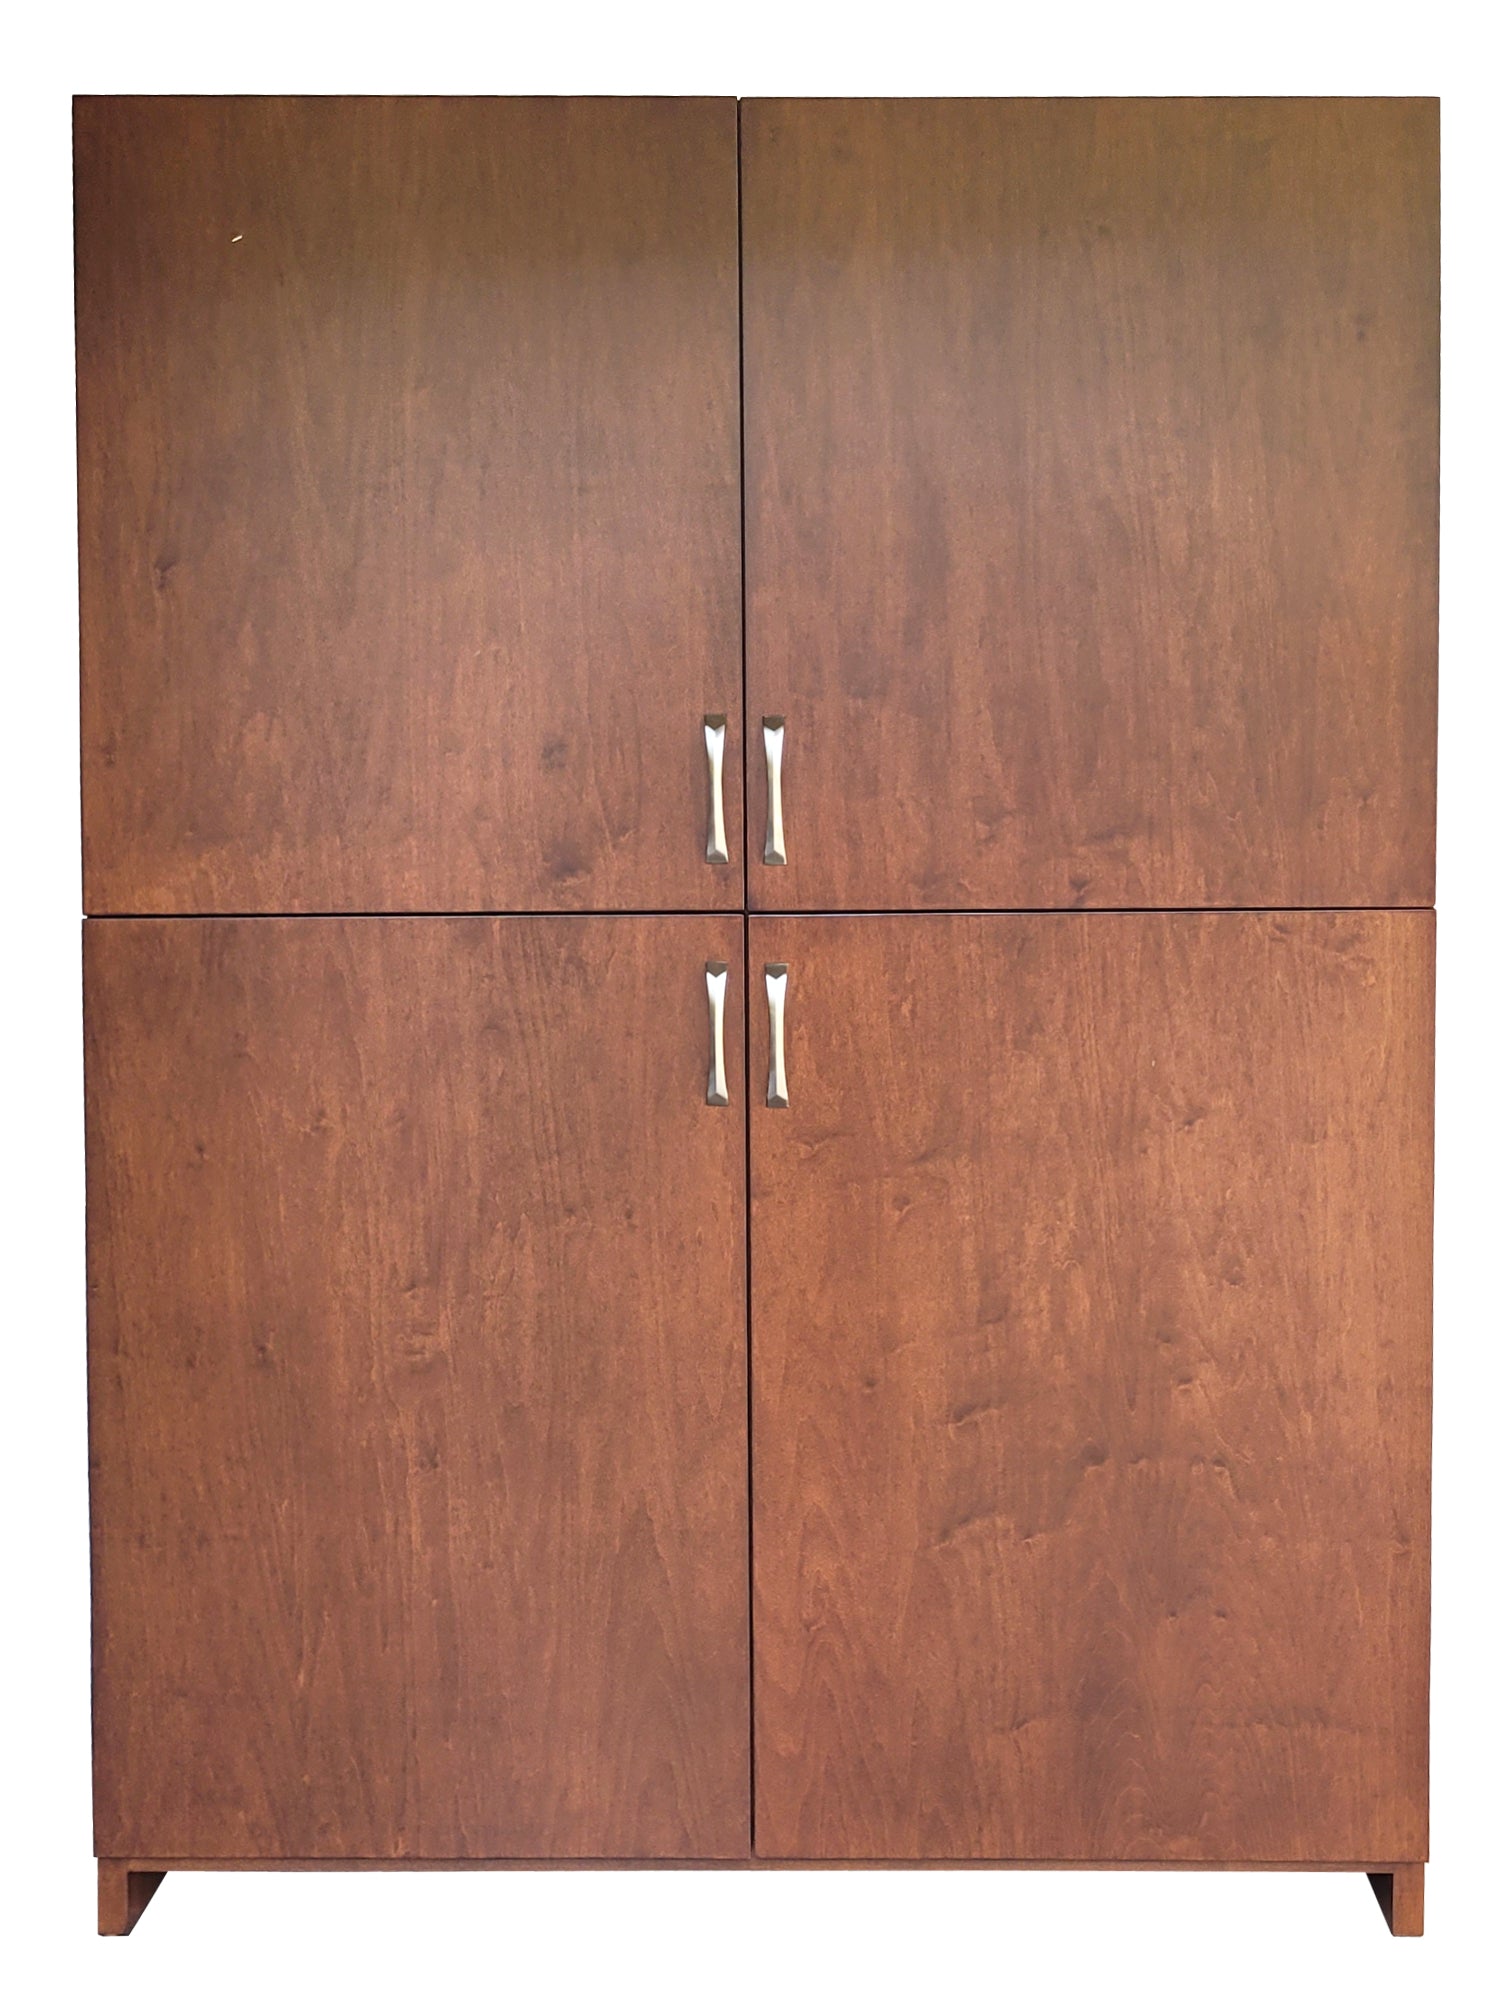 Boxwood Bookcase - 4 door tall wide  | Custom Example